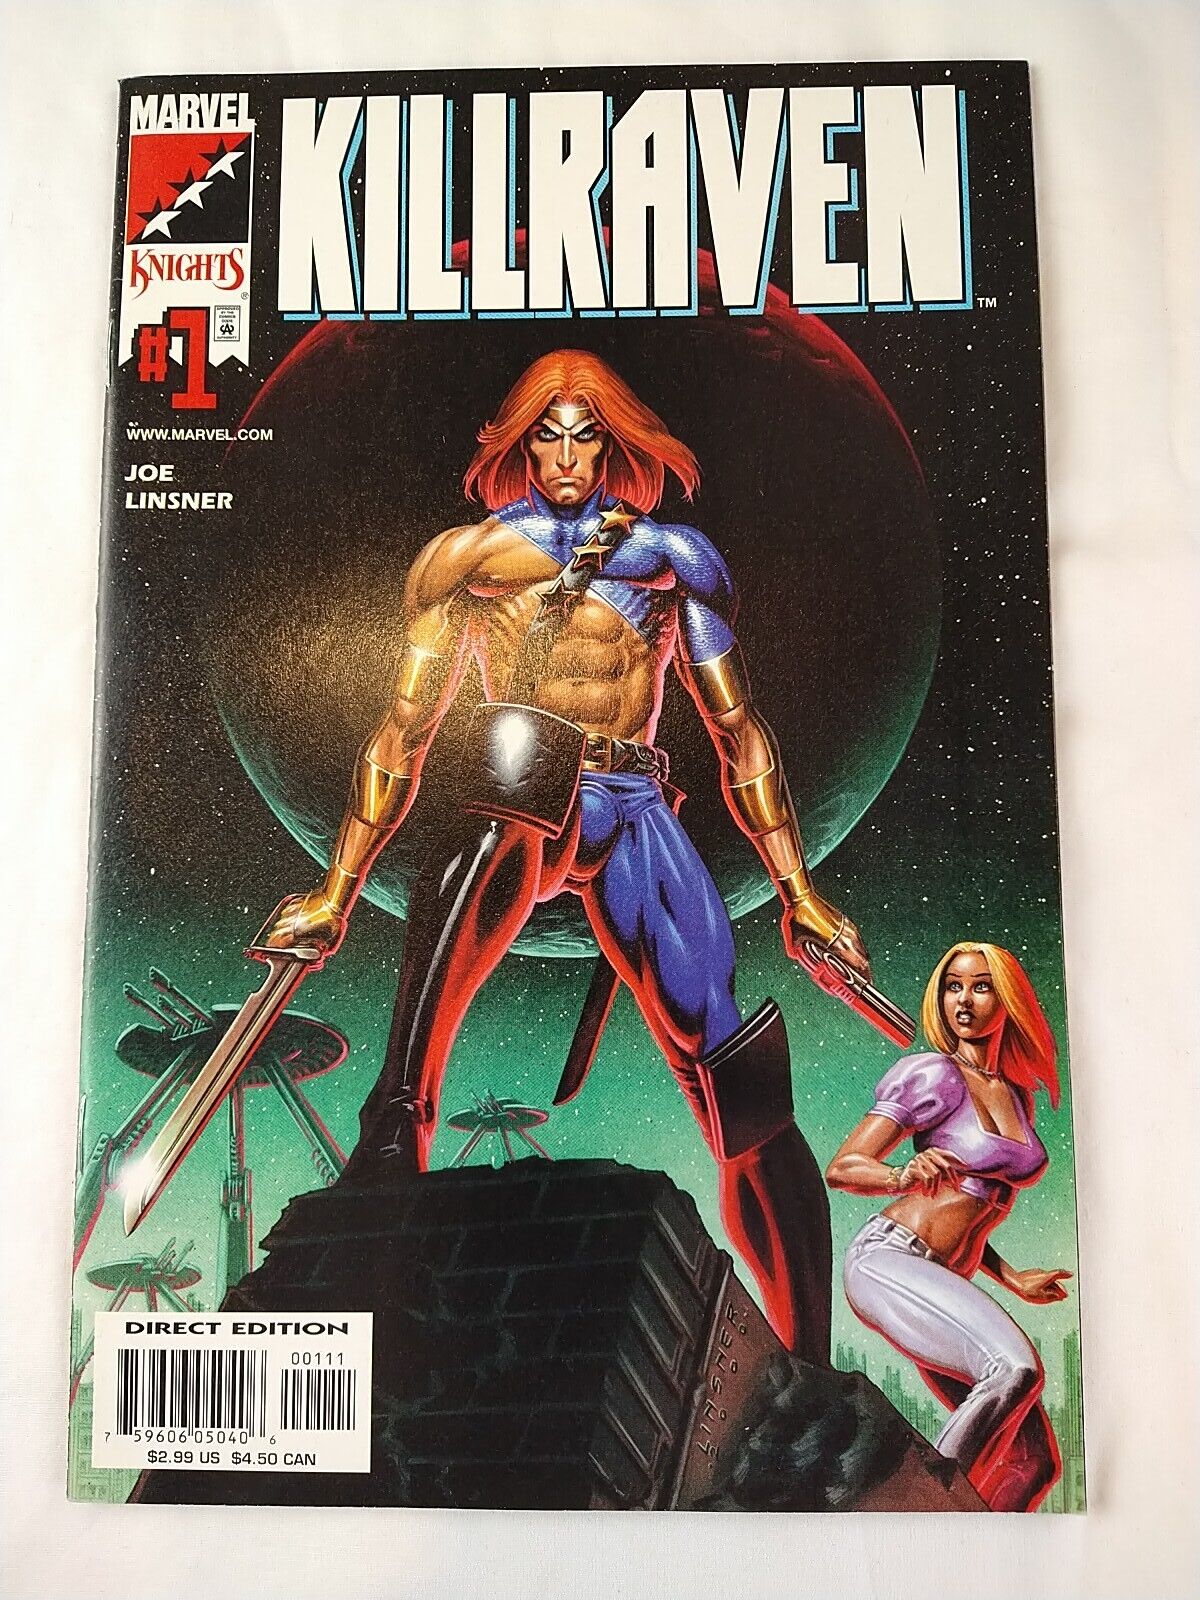 Killraven #1 (2001 Marvel Comics) Joe Linsner Cover Art One-Shot Marvel Knights